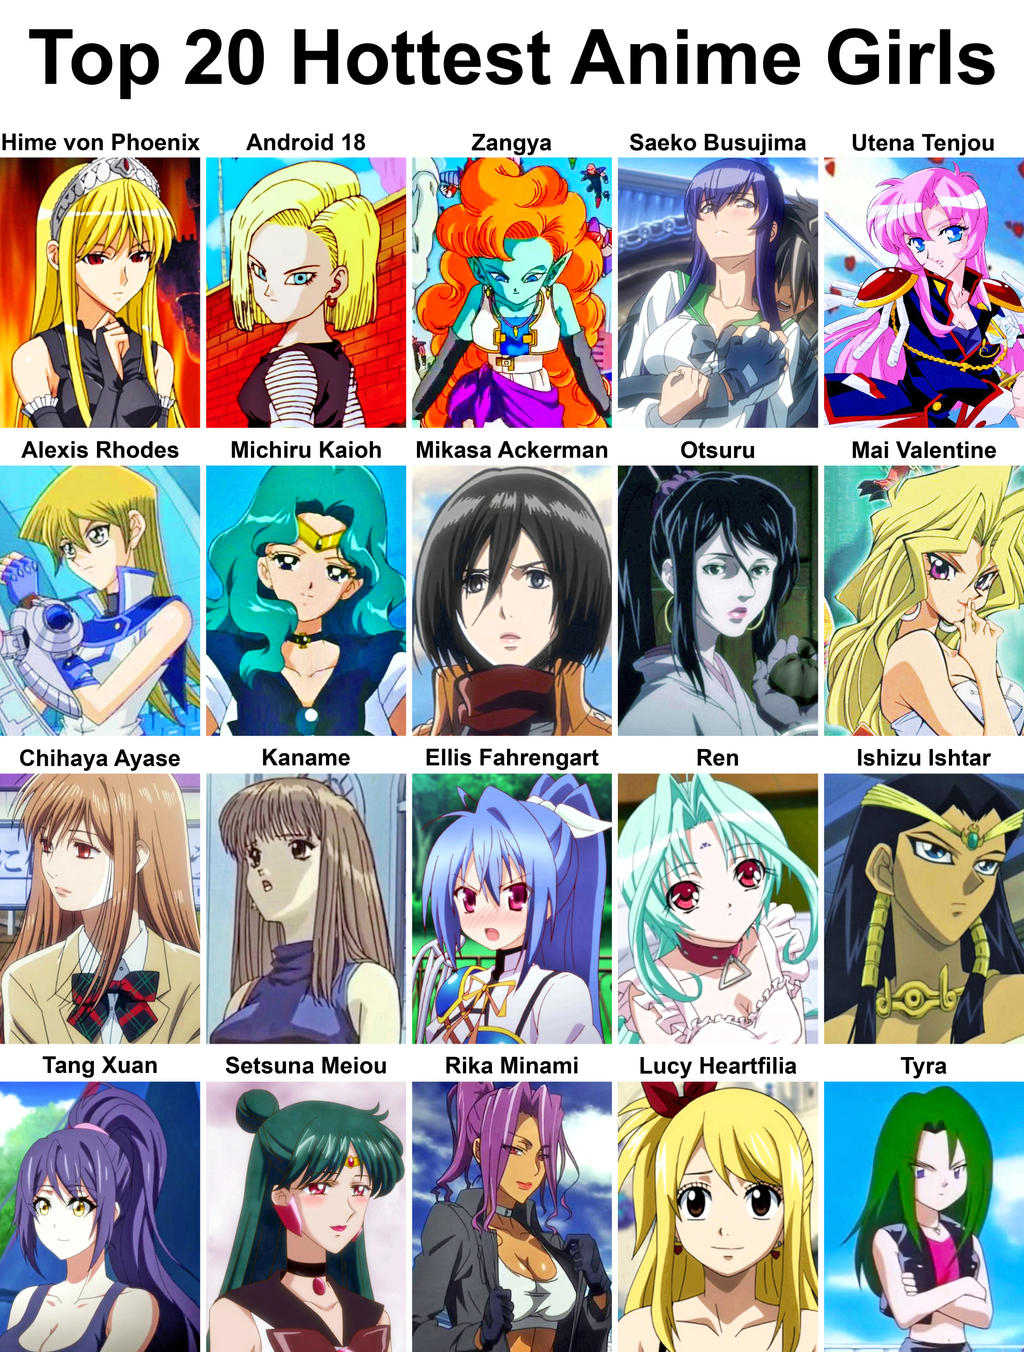 Top 20 Hottest Anime Girls - My Picks by SilverBuller on DeviantArt